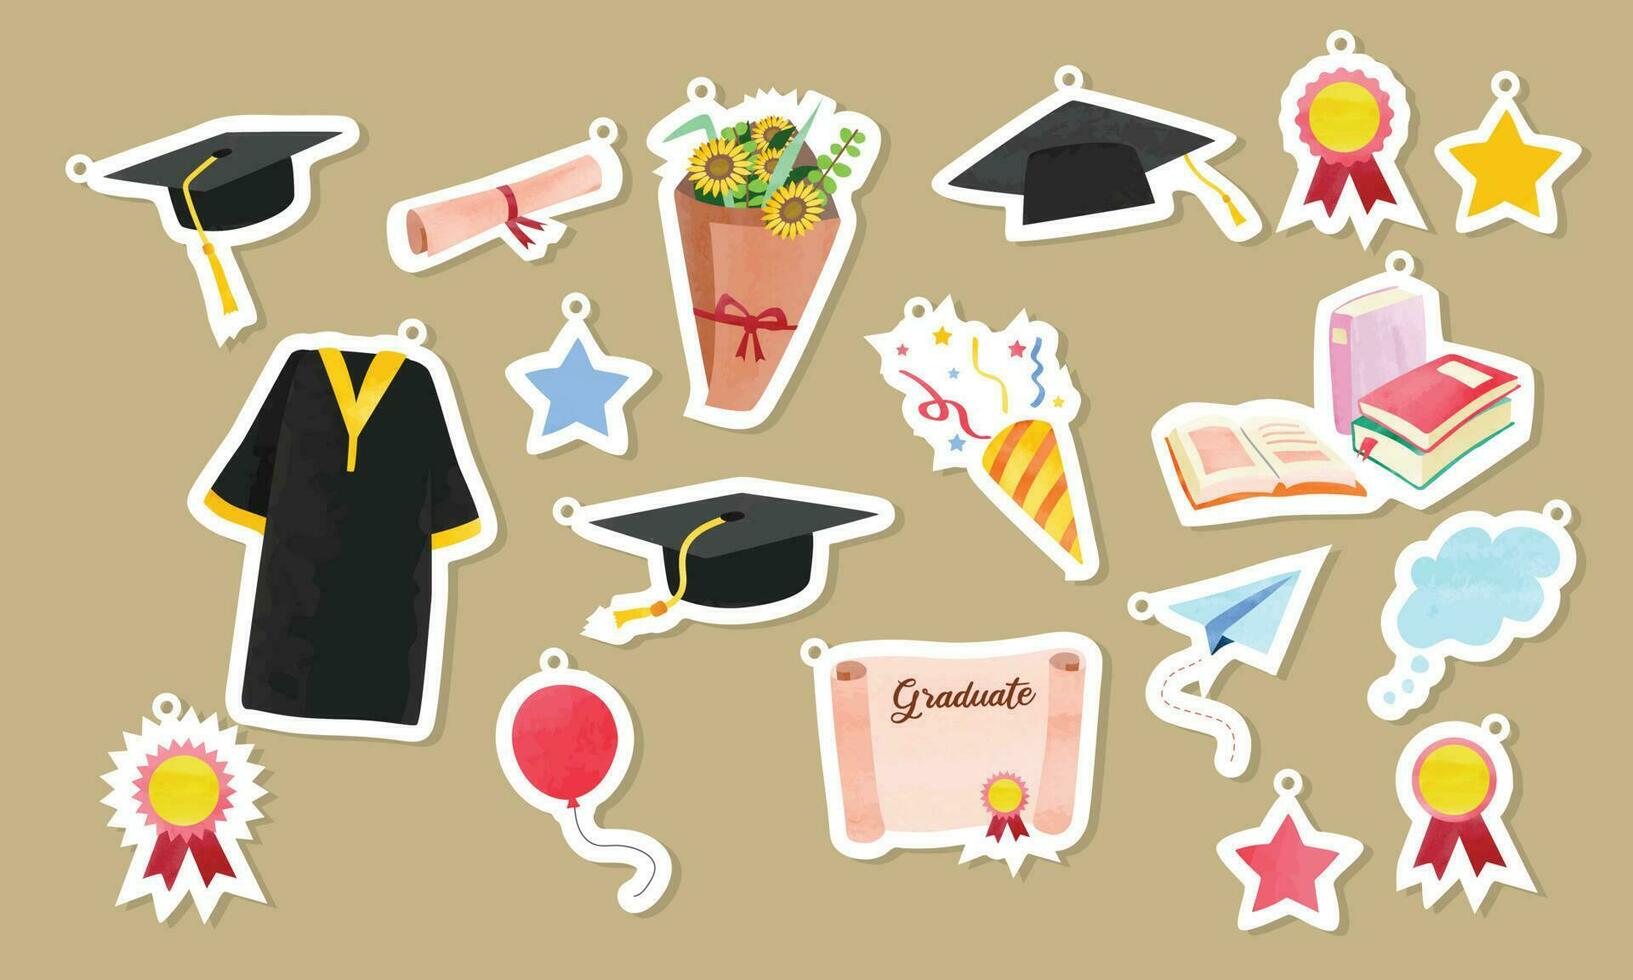 Graduation clipart cartoon stickers set. Graduation gown, cap, diploma, confetti, ribbon, flower bouquet stickers vector design. School graduation concept